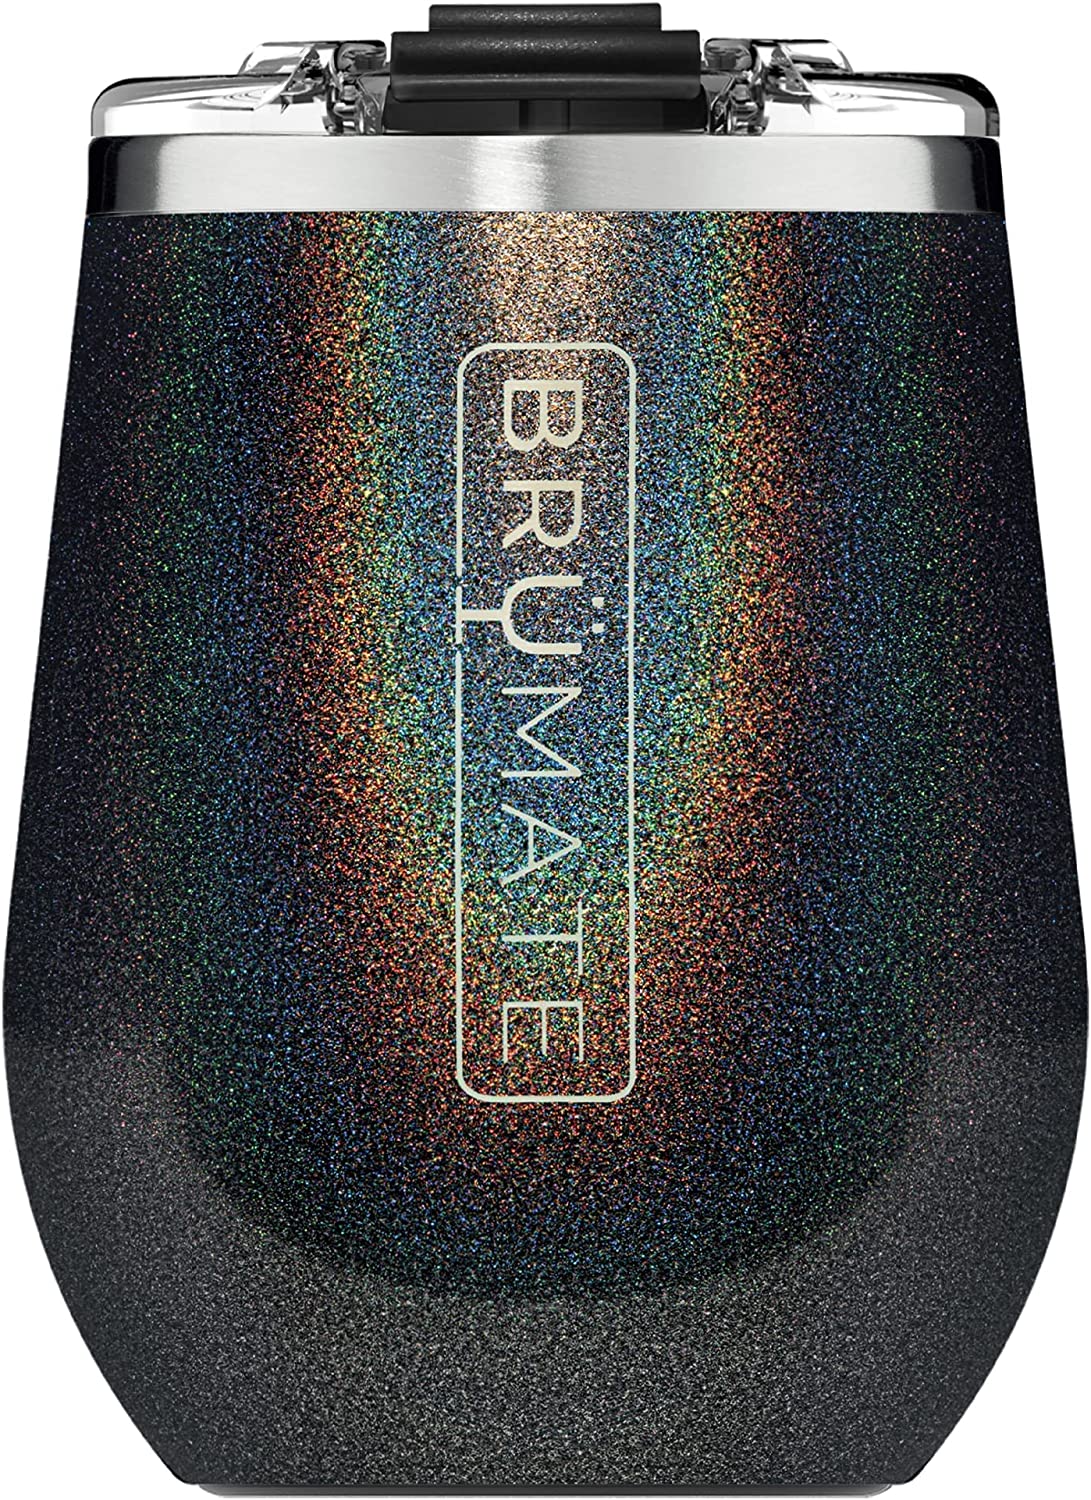 Brumate Uncorkd XL 14oz Wine Tumbler - Glitter Charcoal